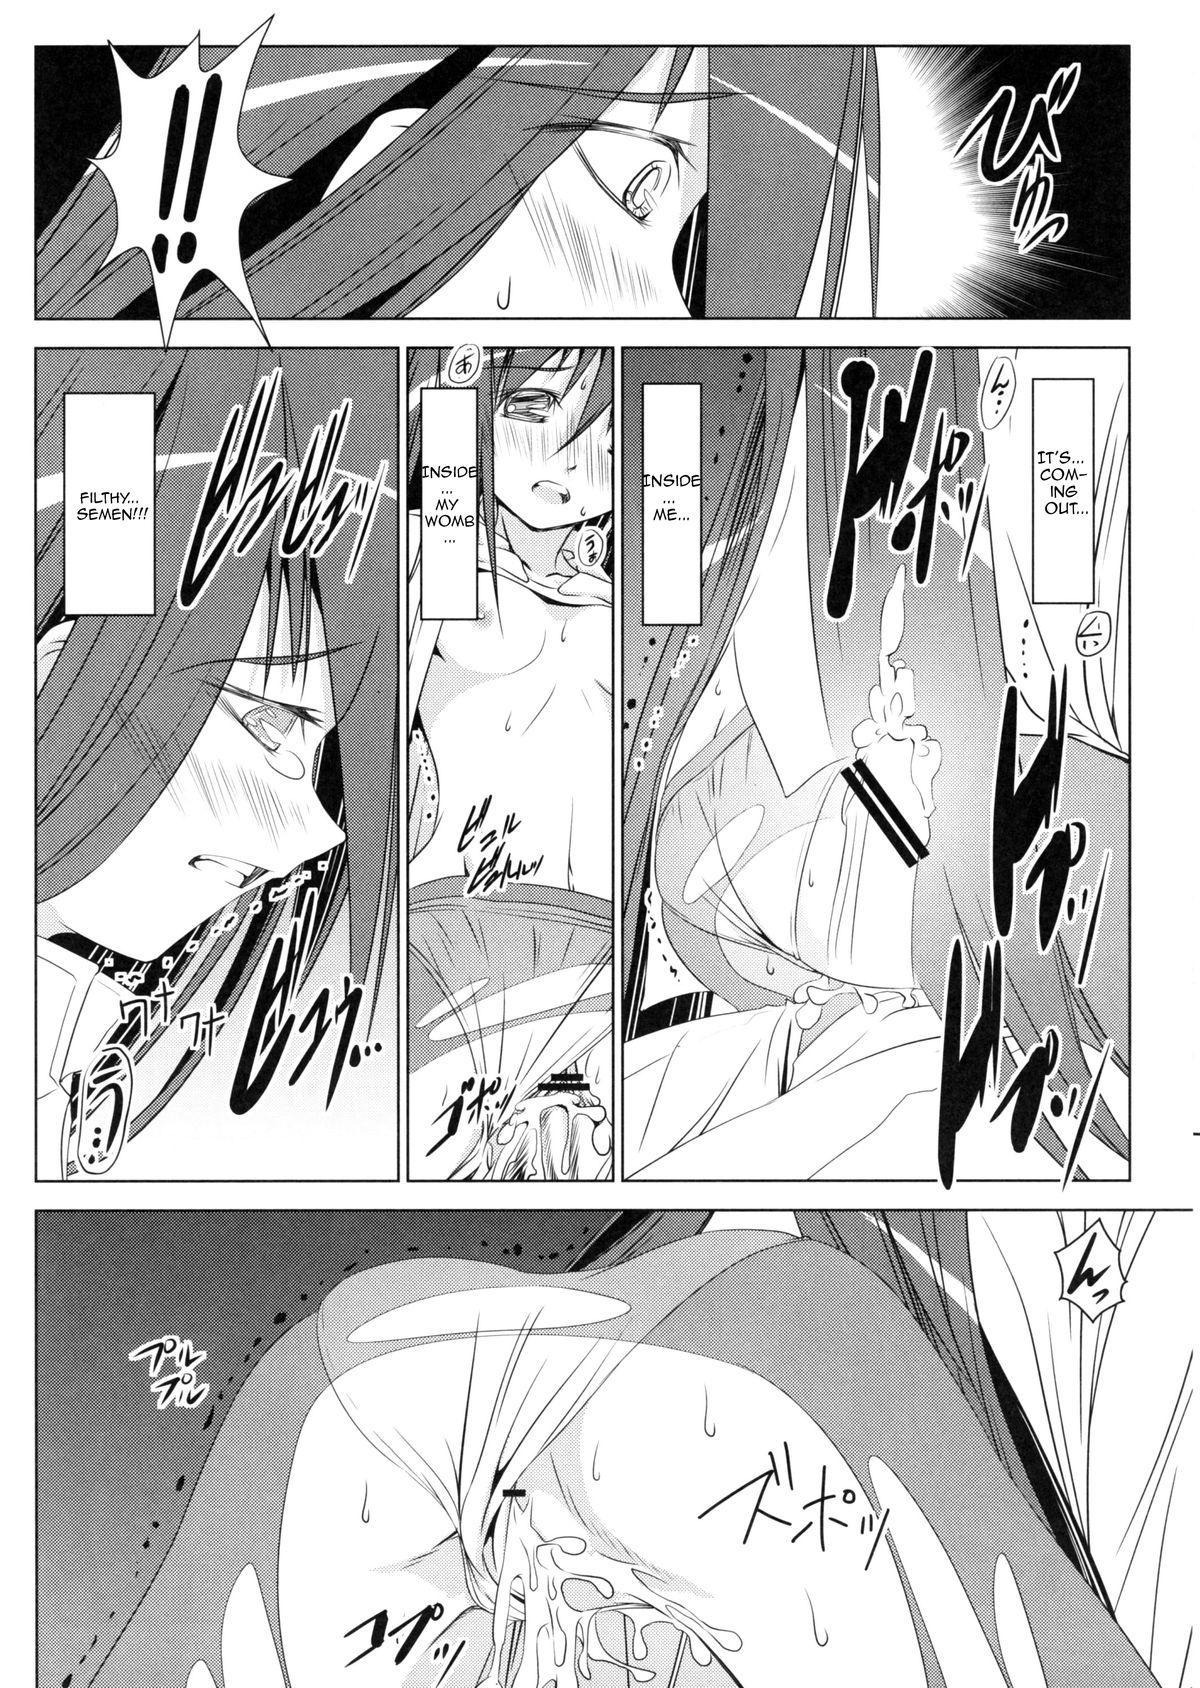 Sextape Homura's Humiliation - Puella magi madoka magica Korean - Page 9